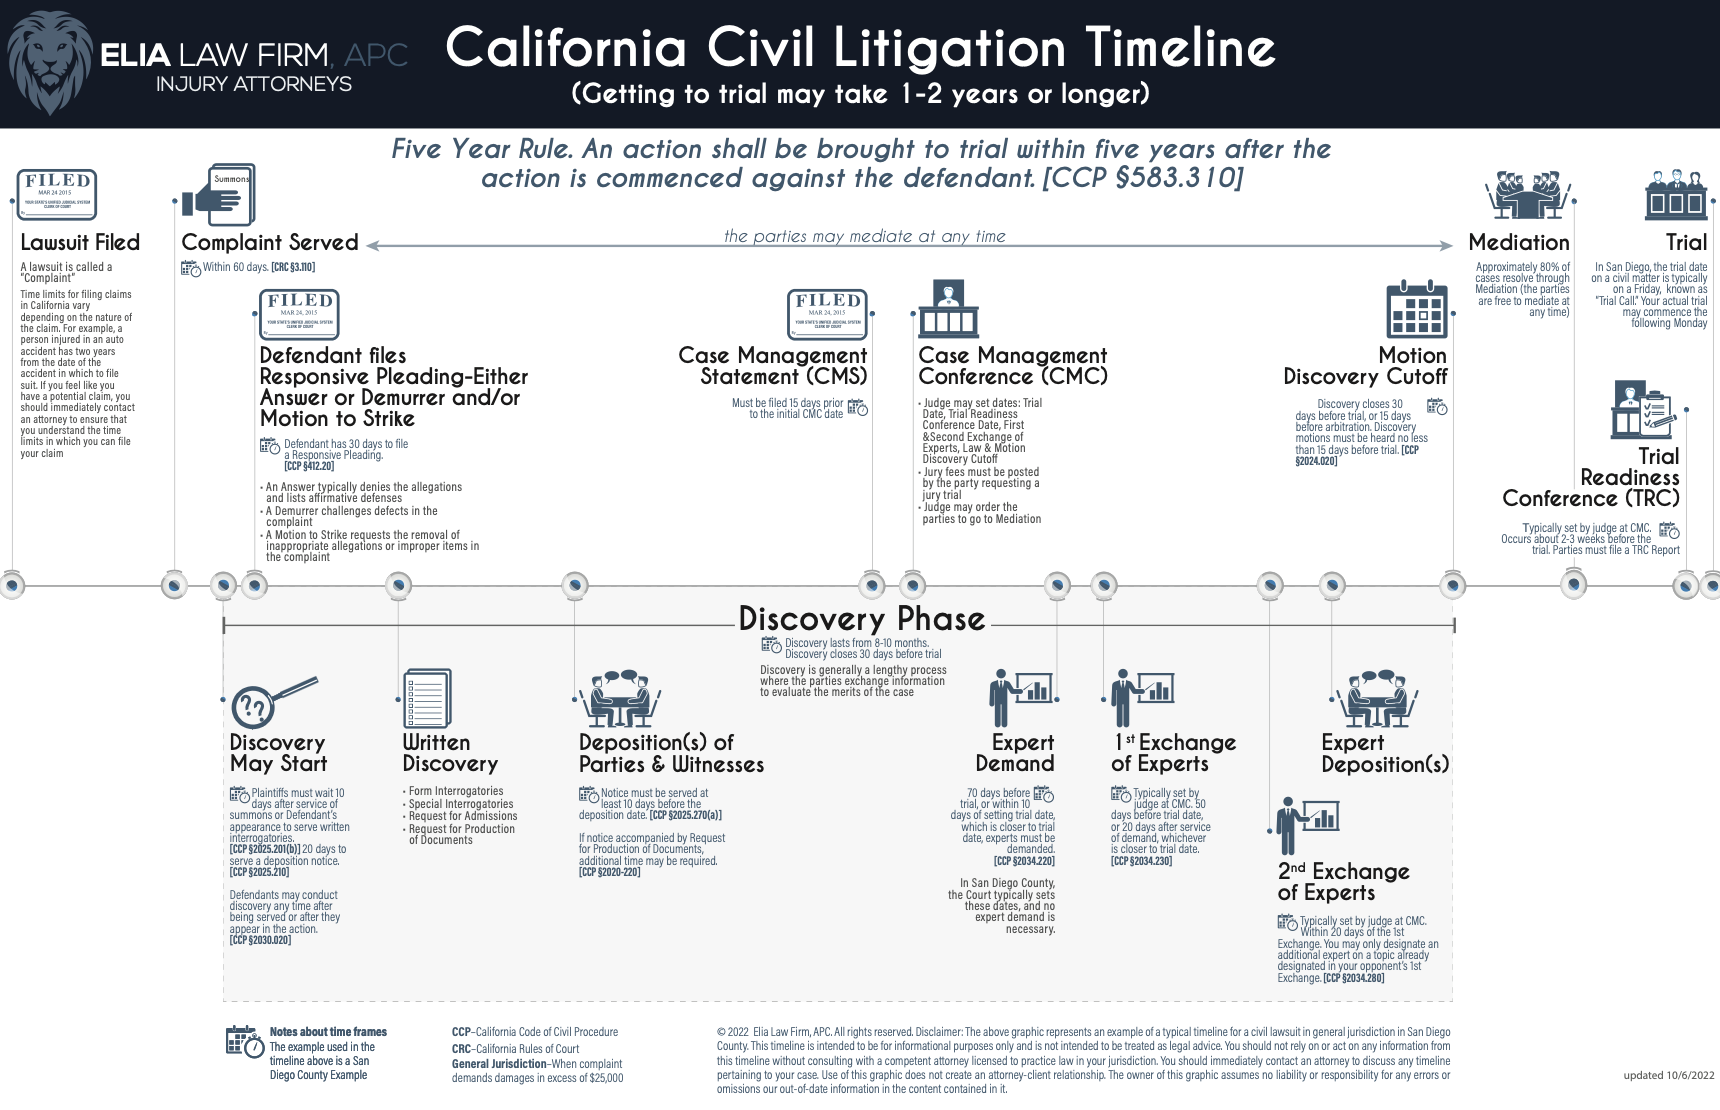 The Civil Litigation Process Timeline Start to Finish